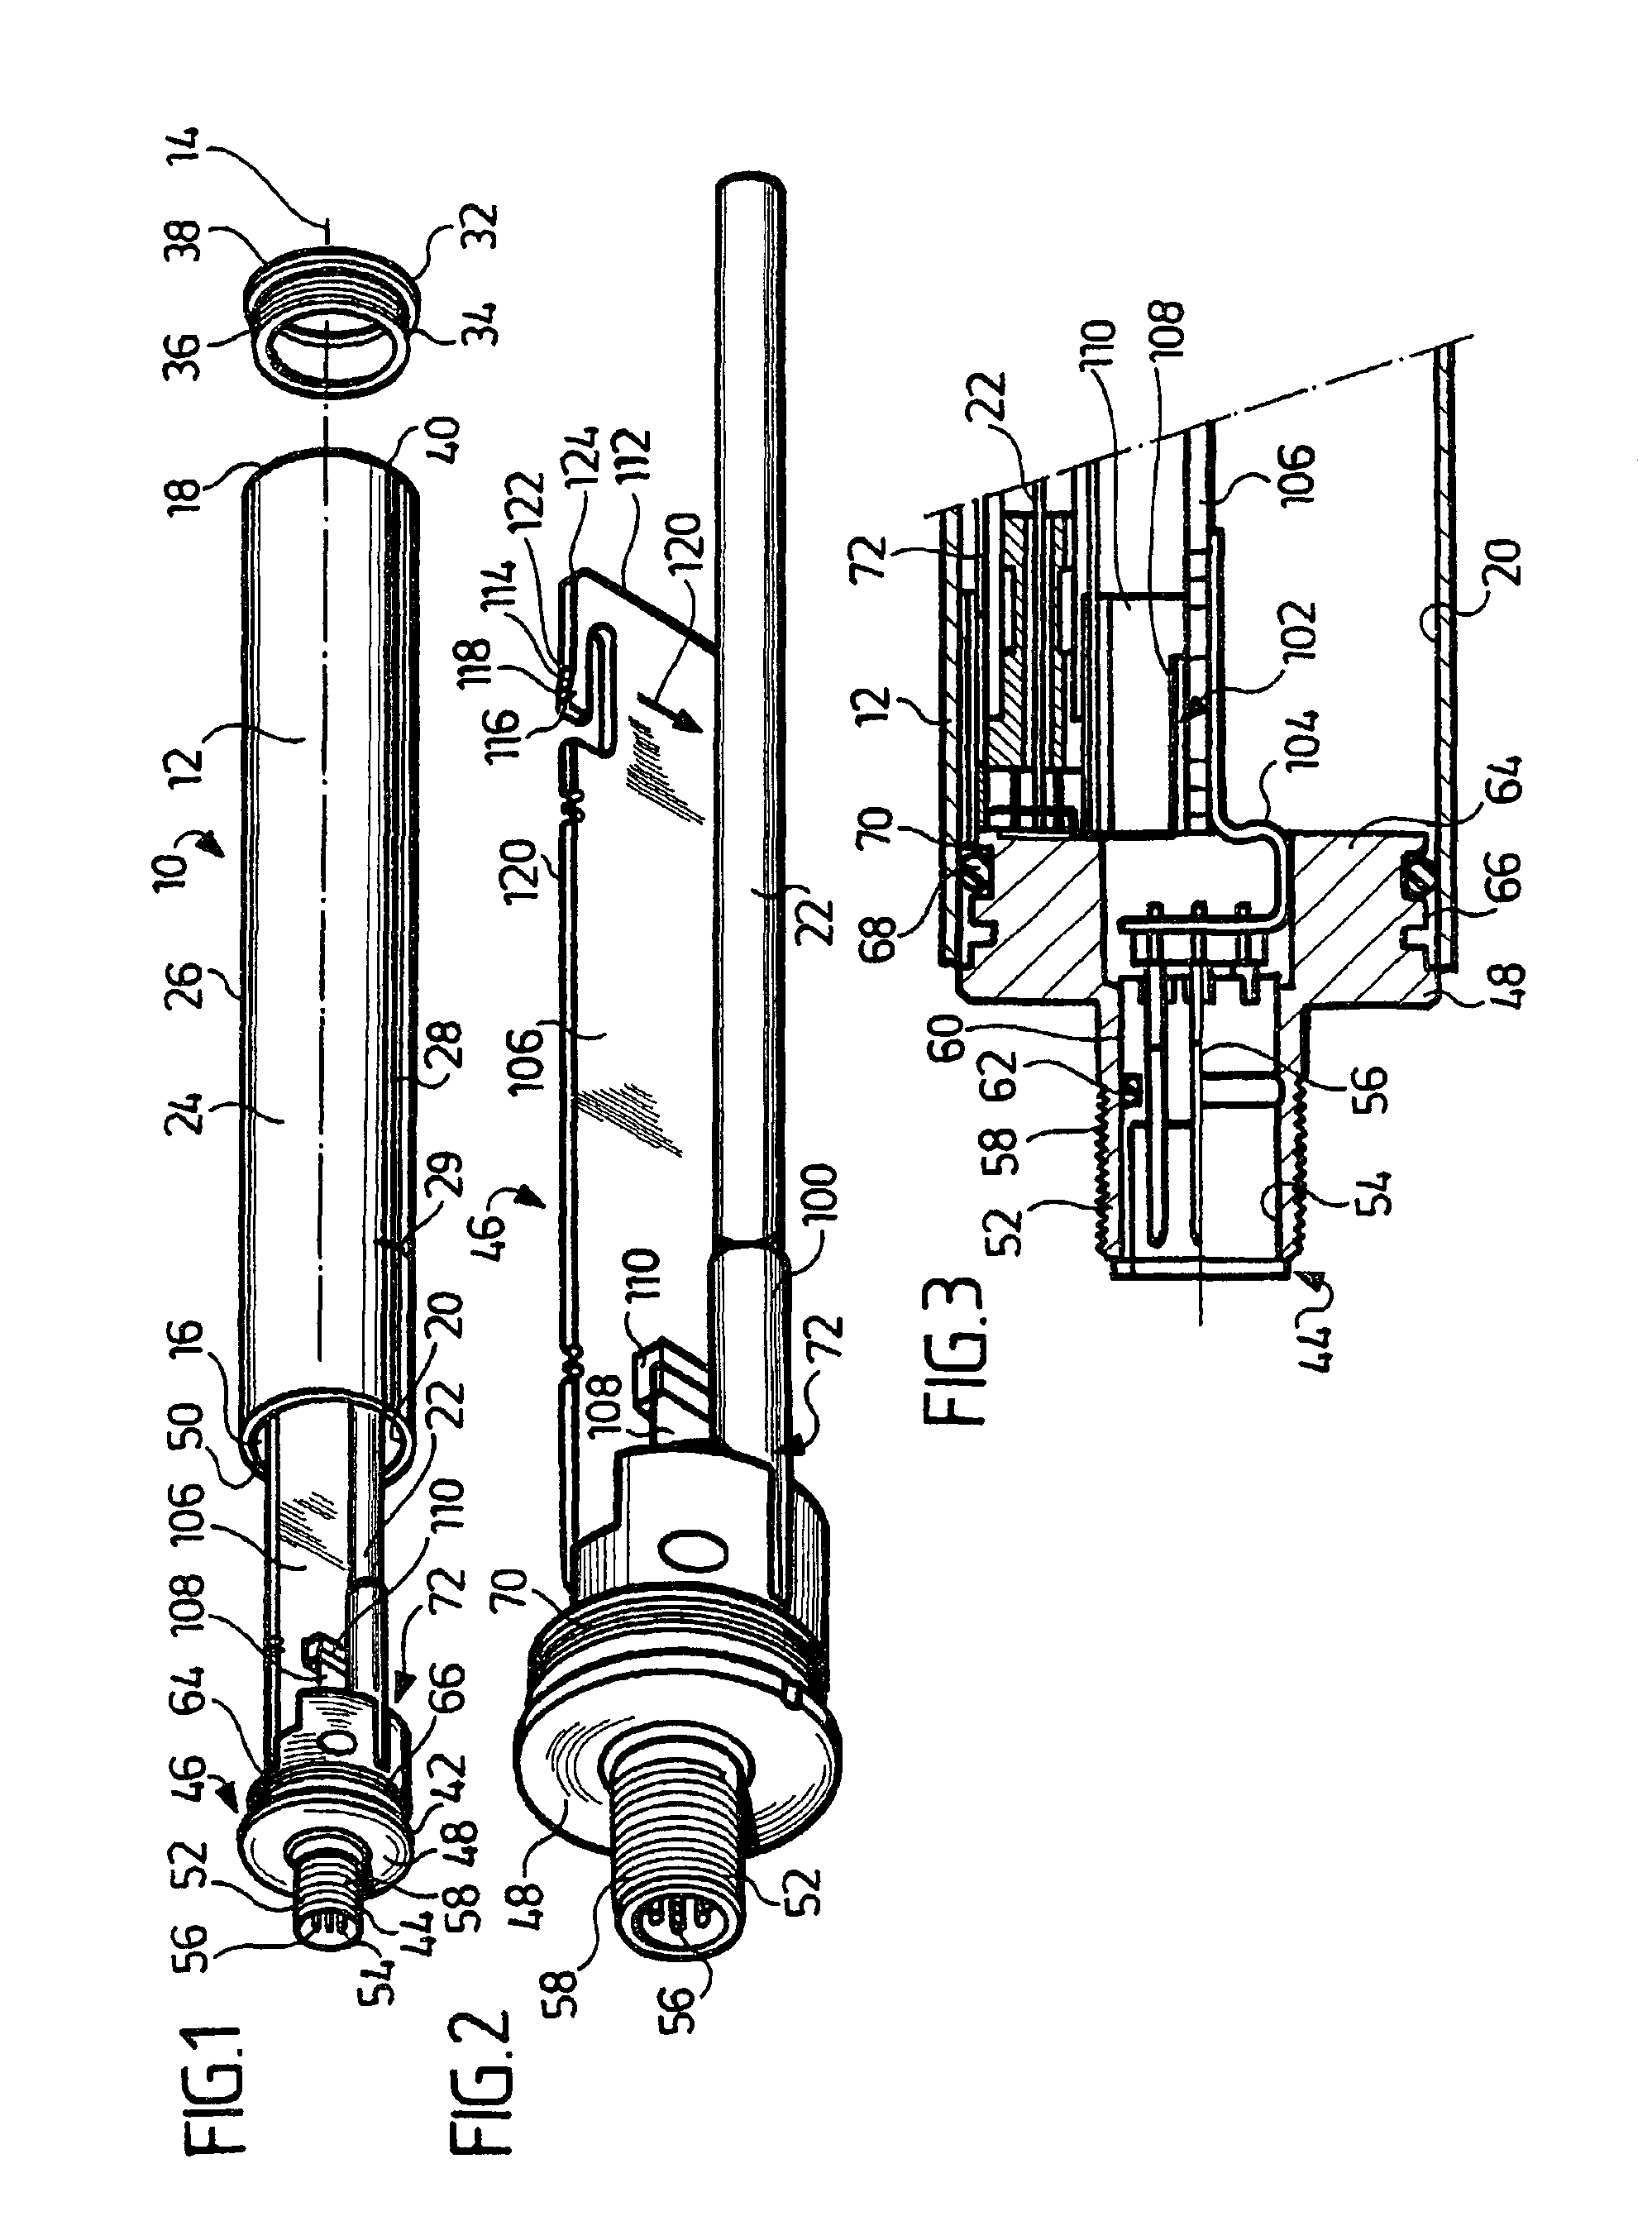 Position transducer device